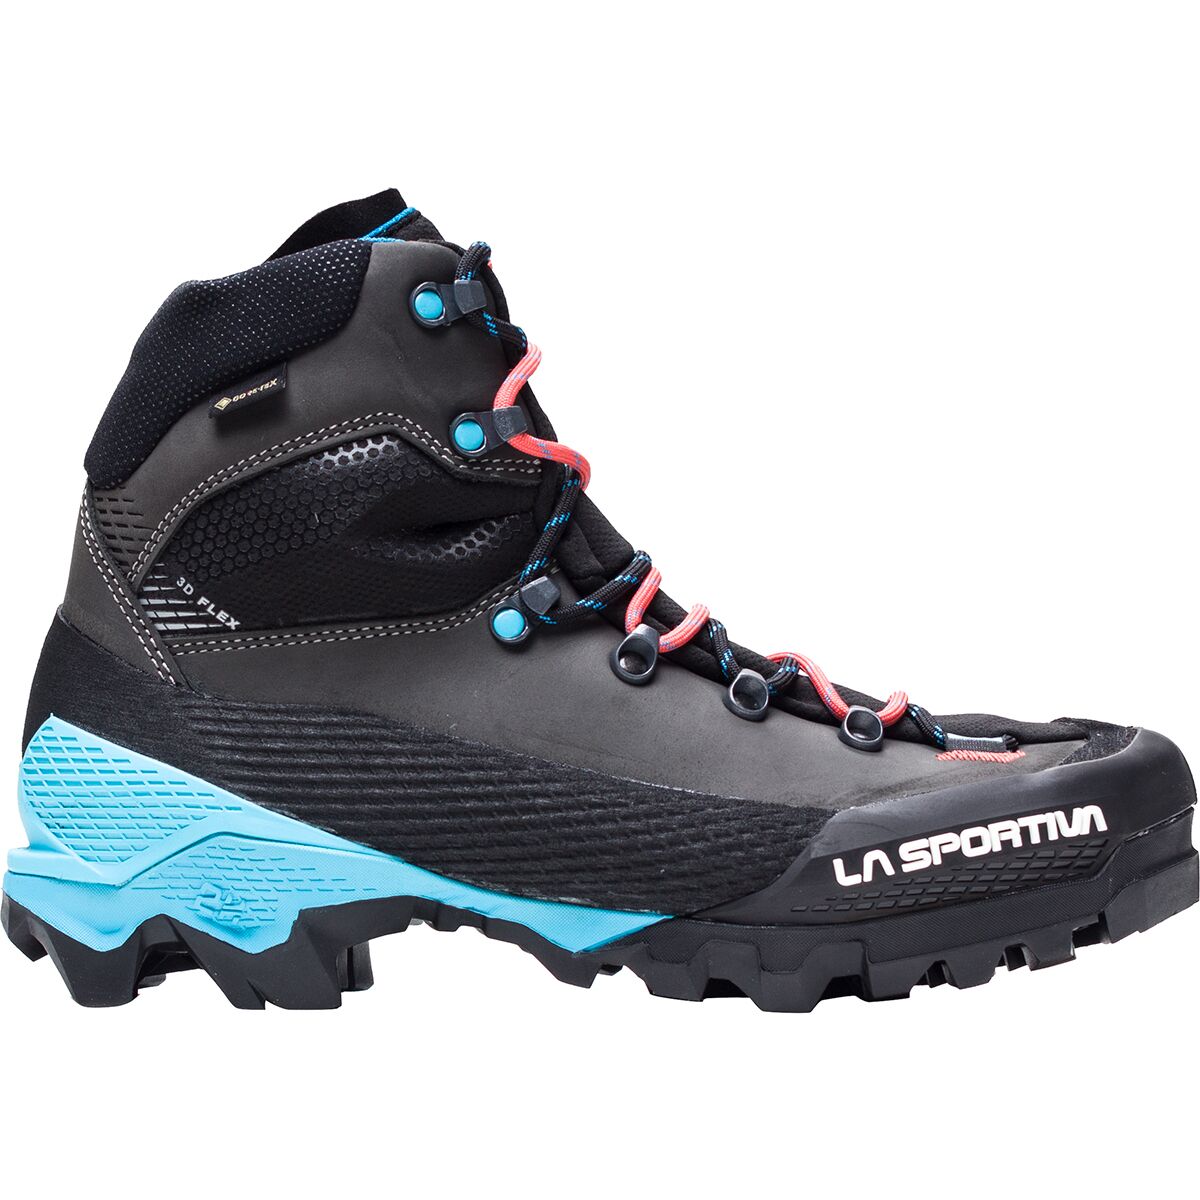 La Sportiva Aequilibrium LT GTX Mountaineering Boot - Women's